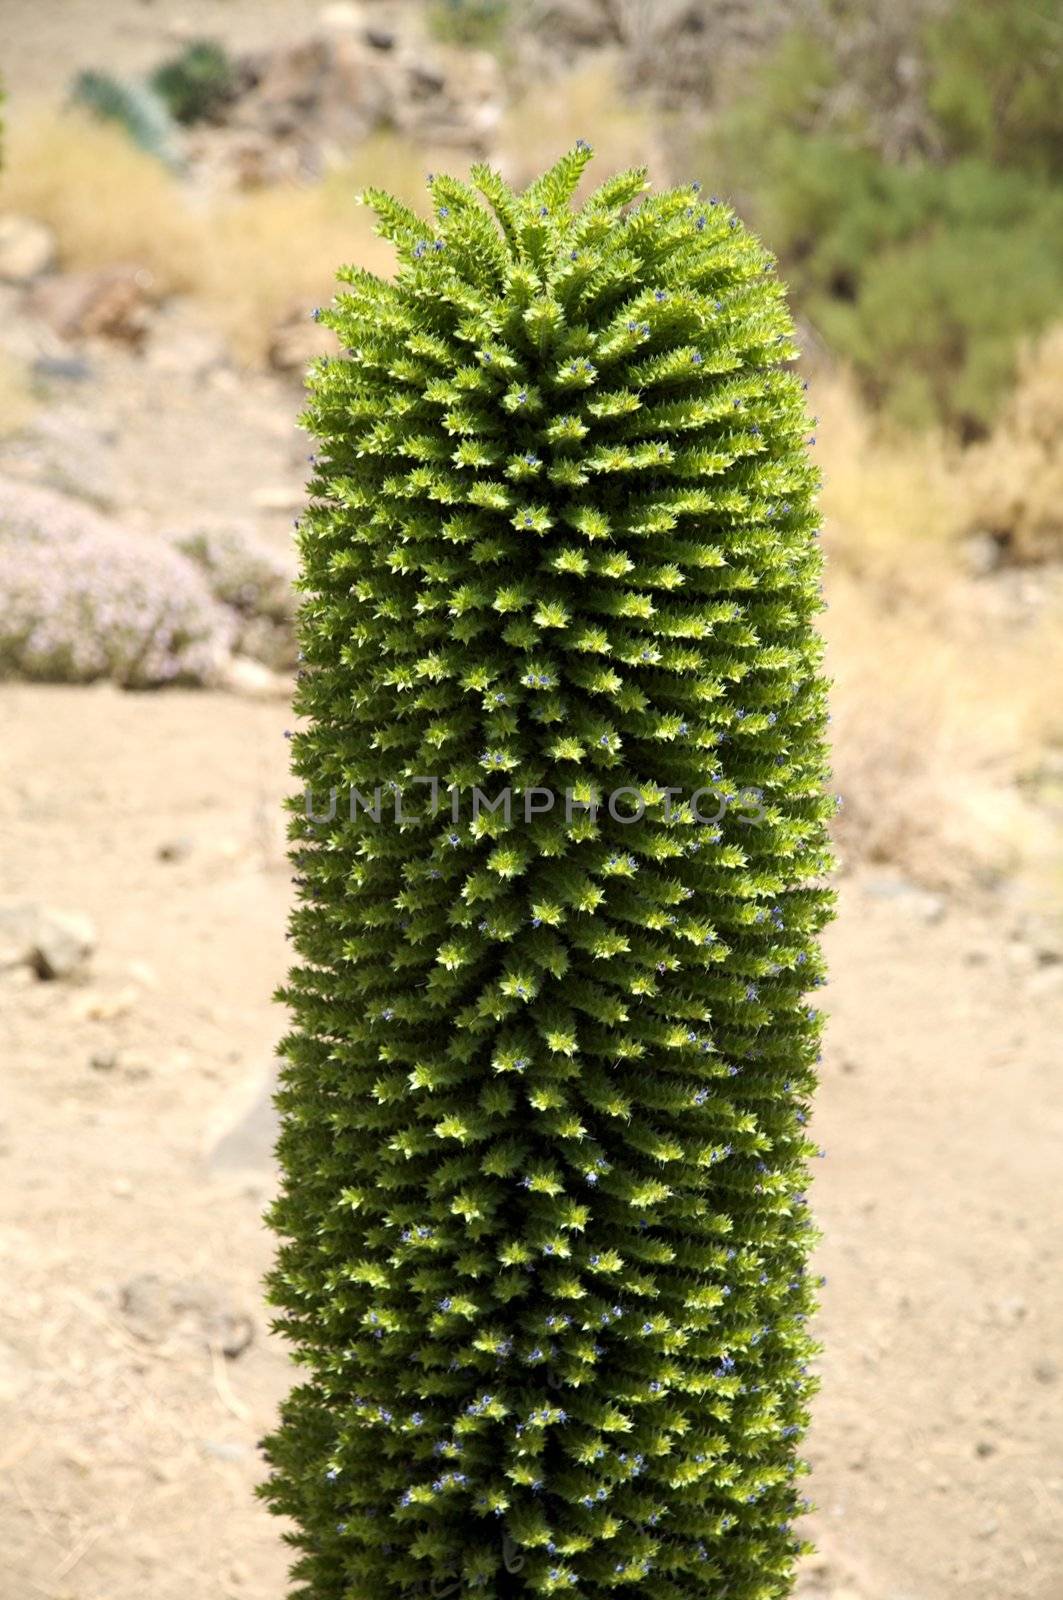 typical green plant near teide volcano at tenerife island spain